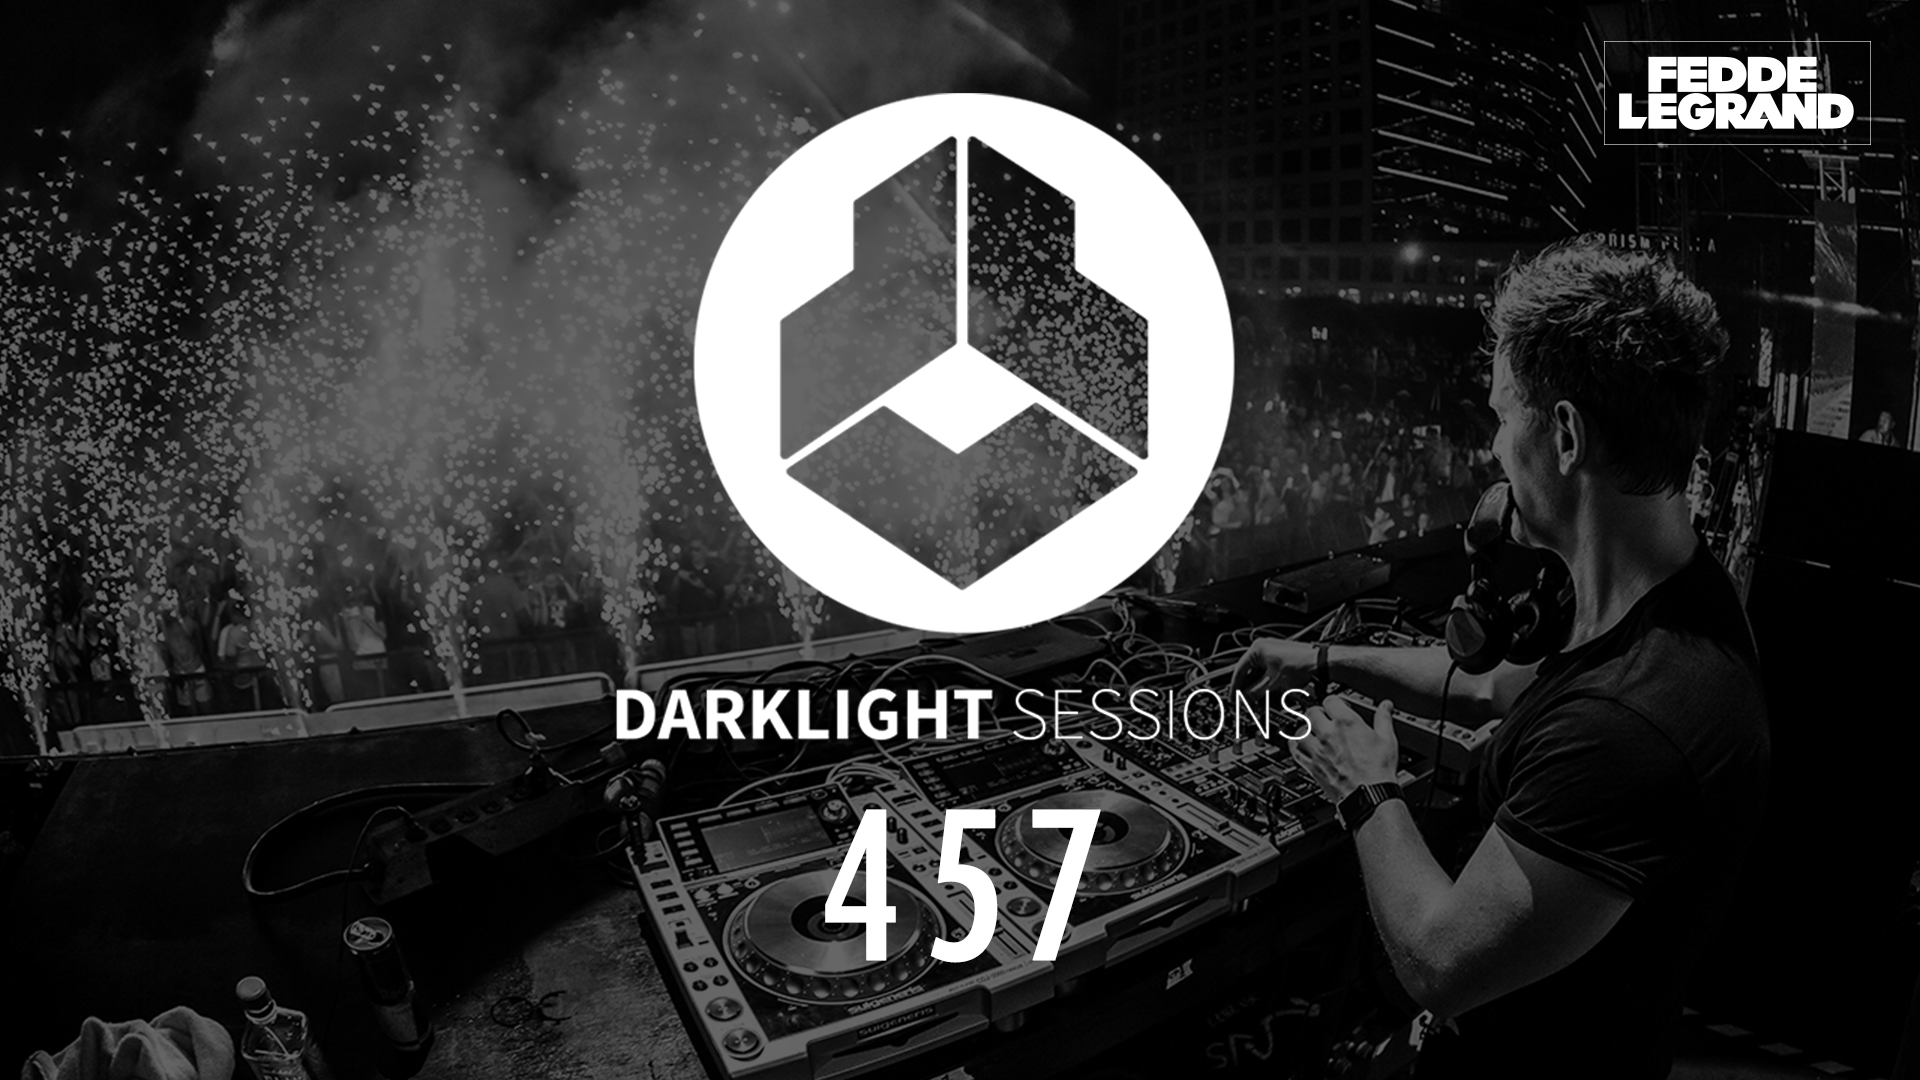 Darklight Sessions 457